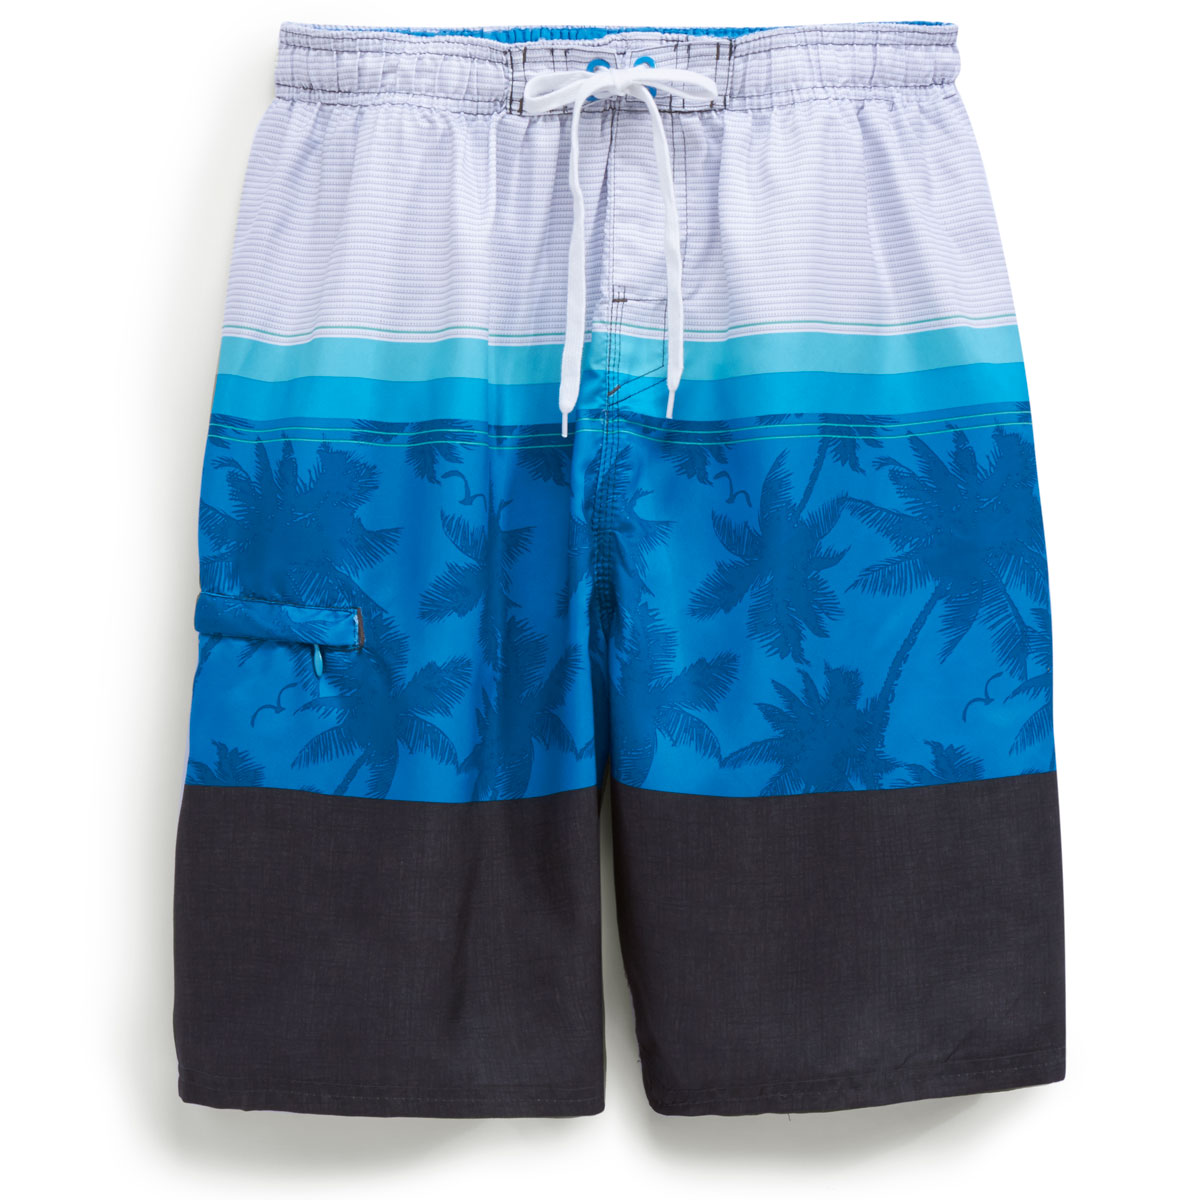 Burnside Men's Molokai Boardshorts - Blue, S